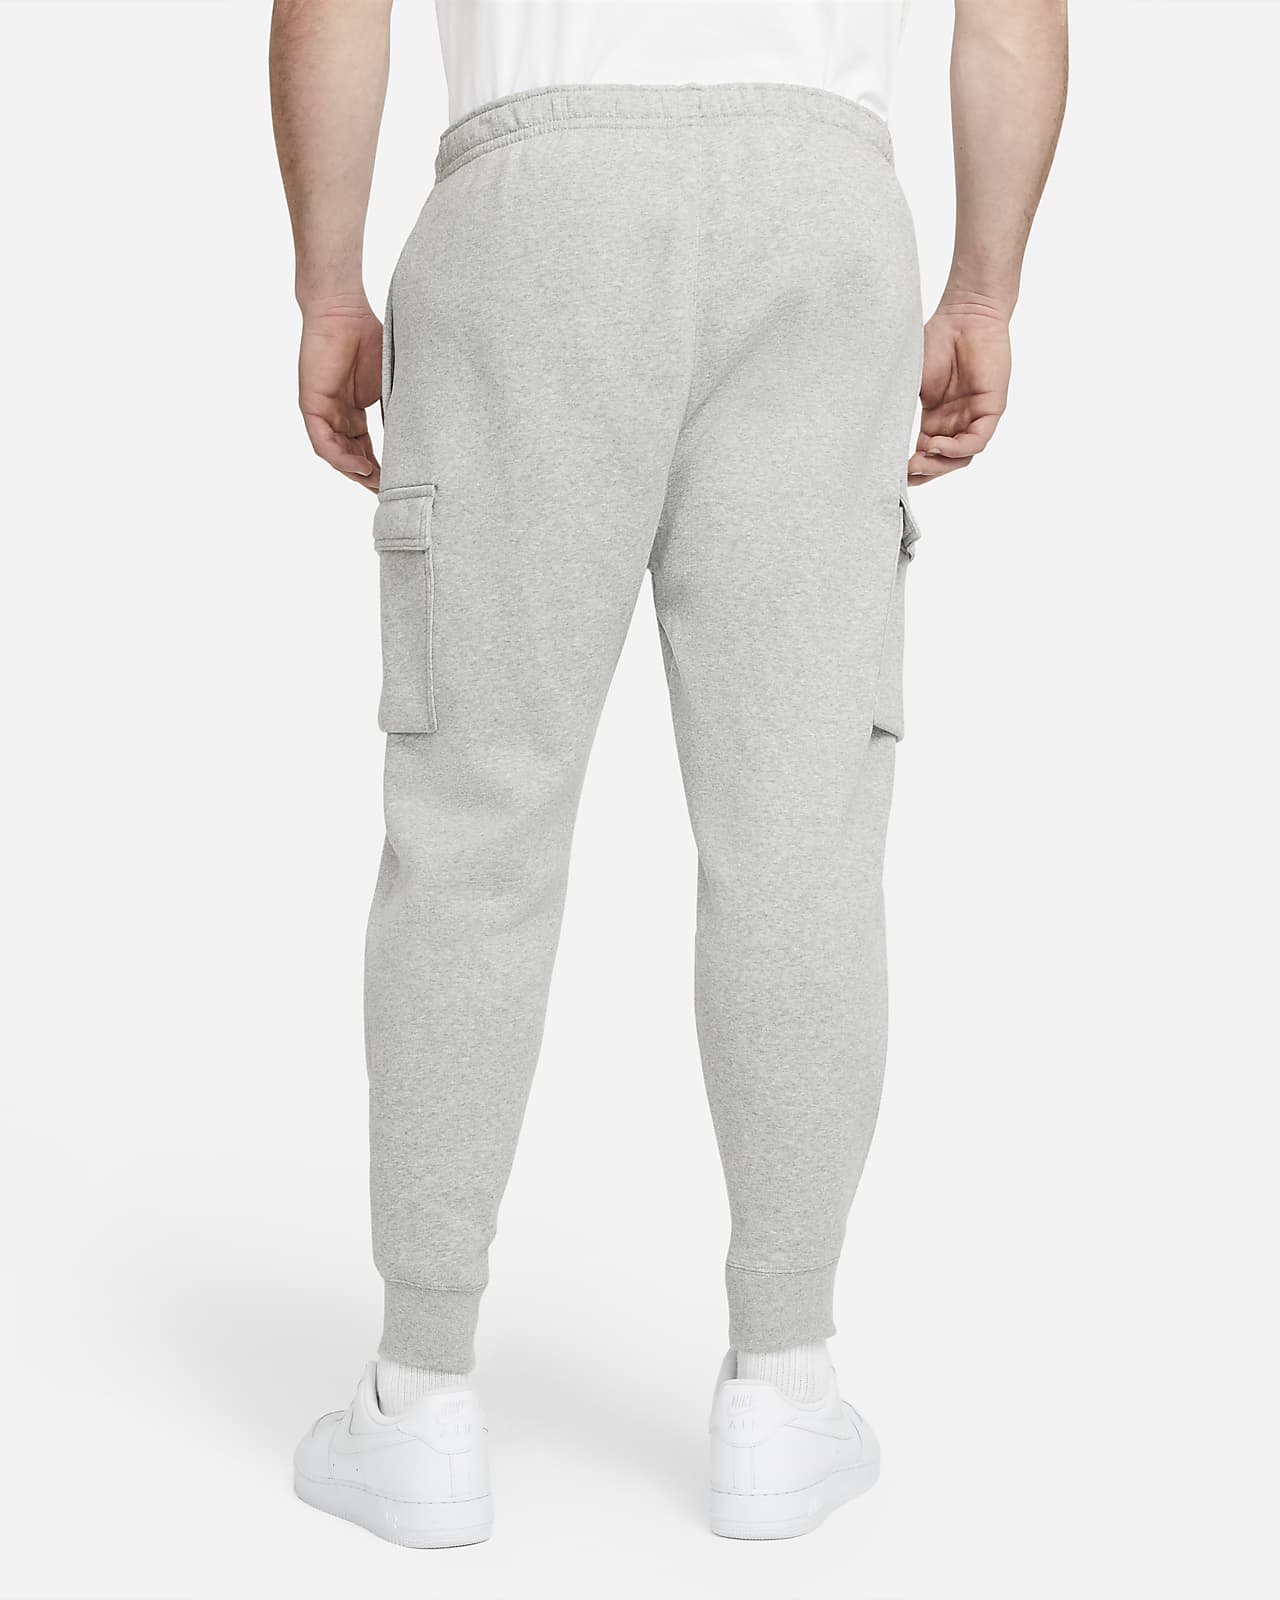 Nike Sportswear Pantalon de survêtement - dark grey heather/gris